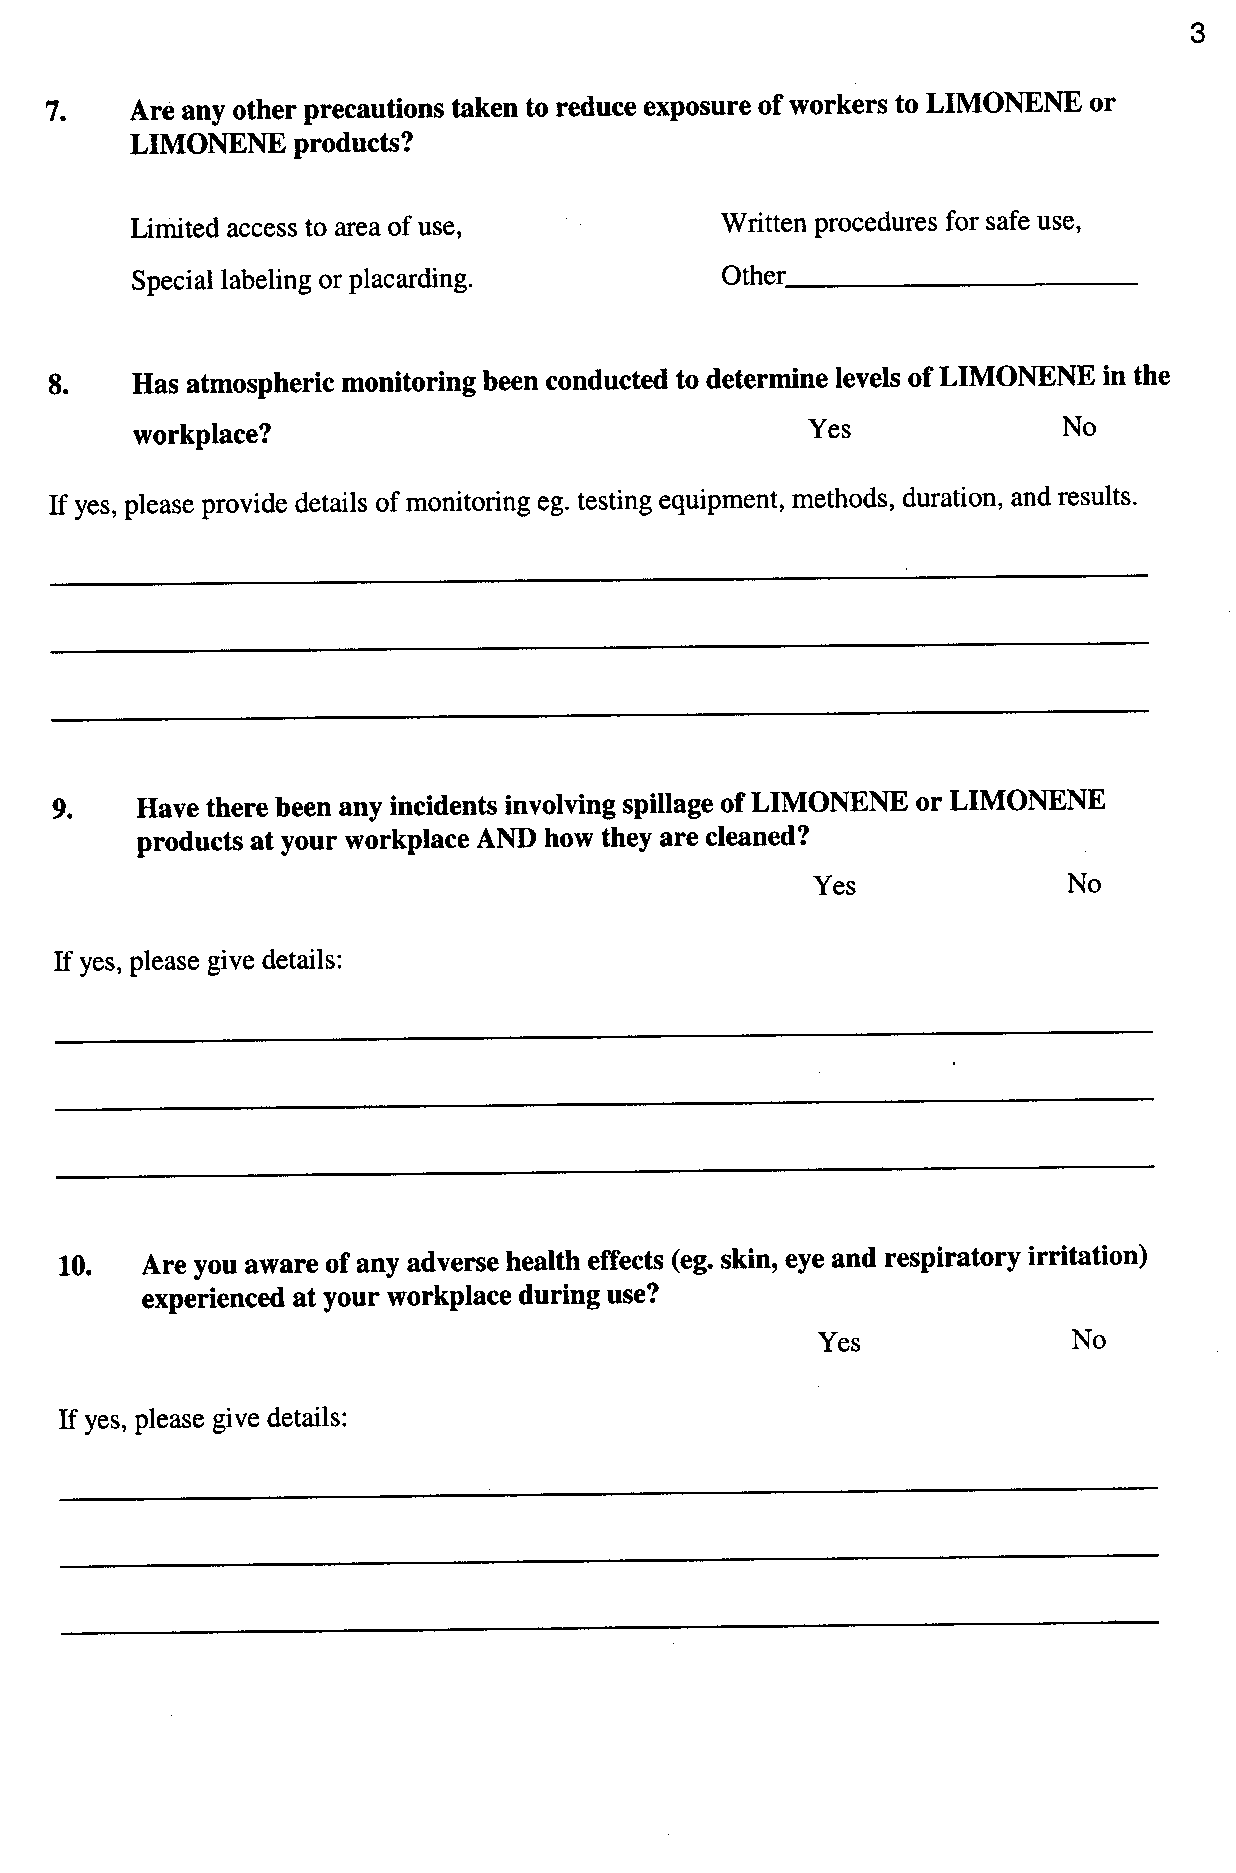 12th page survey